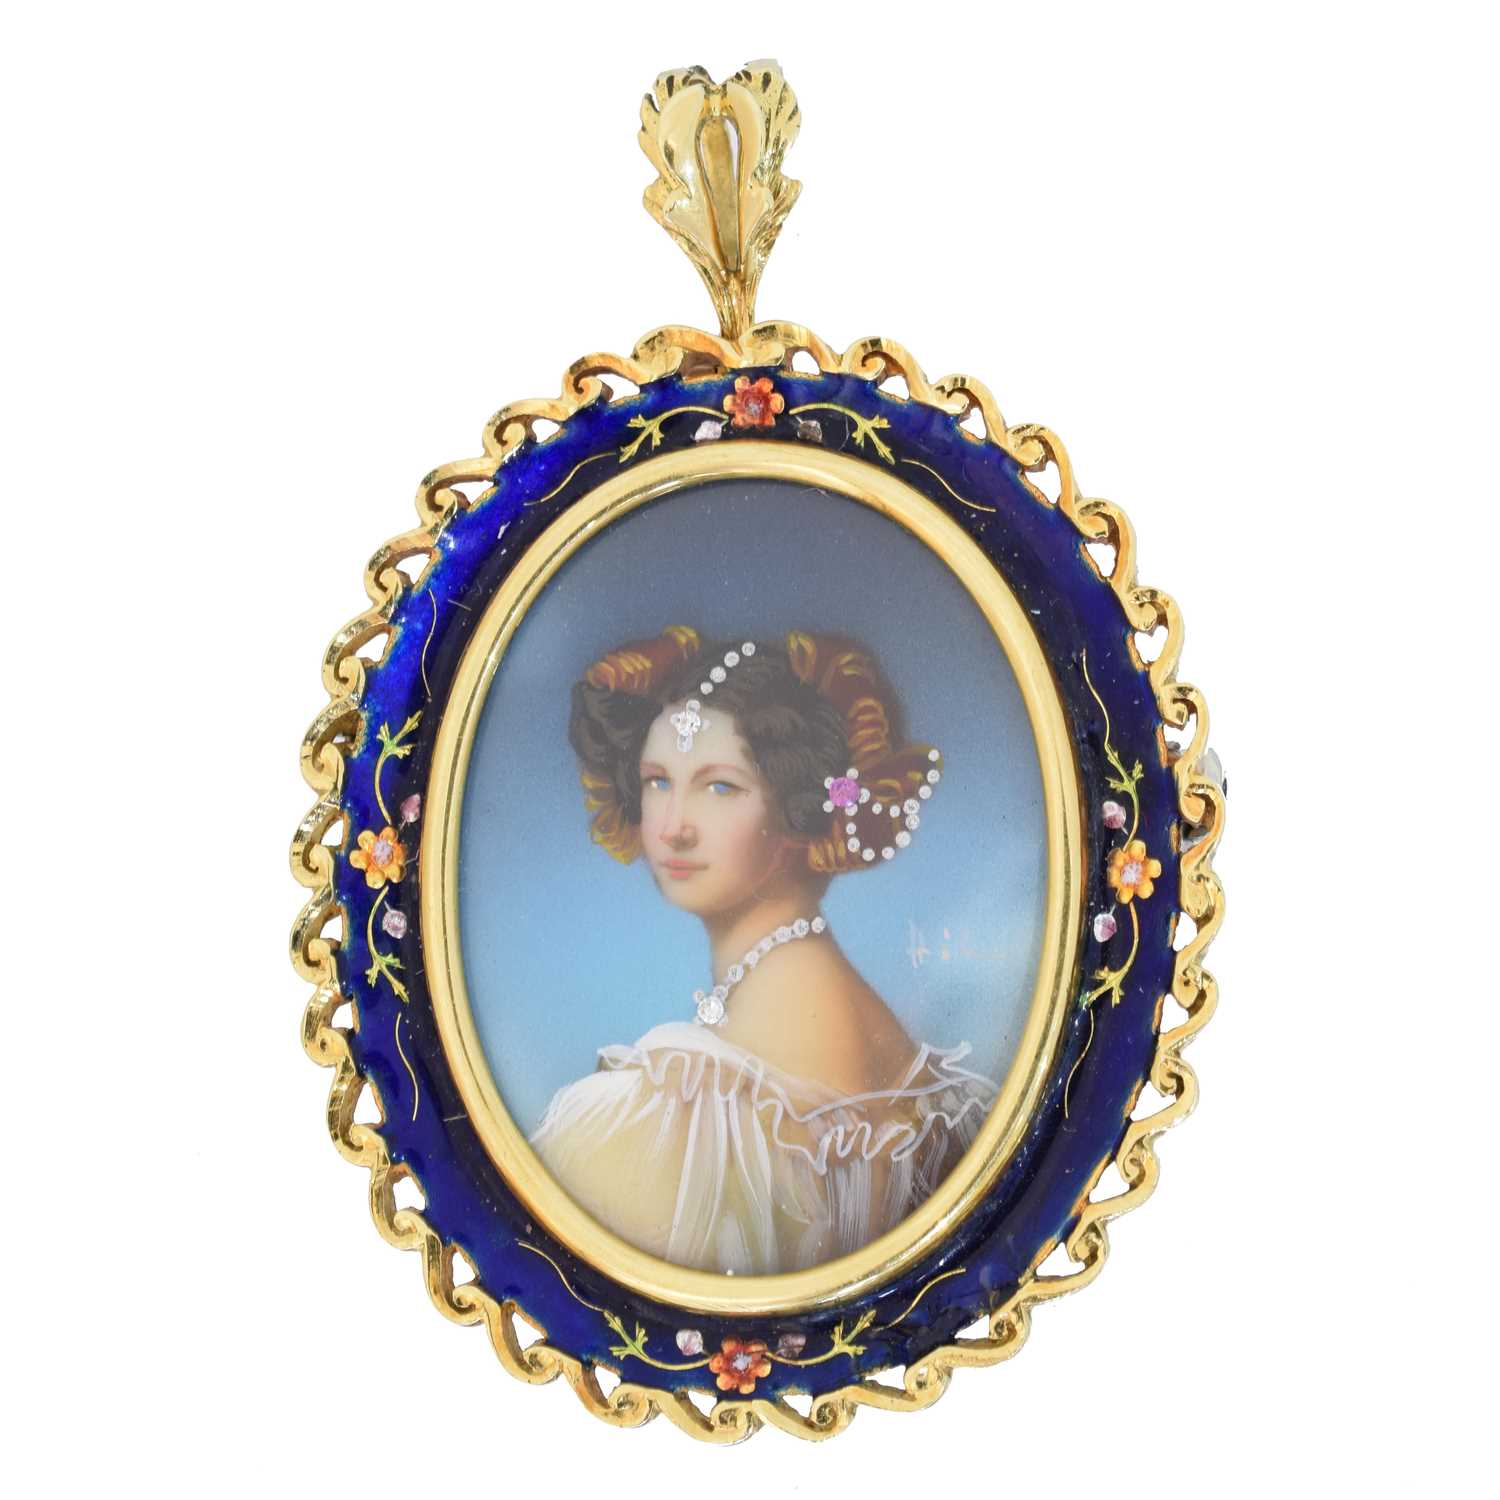 Lot 22 - An 18ct gold enamelled portrait miniature brooch